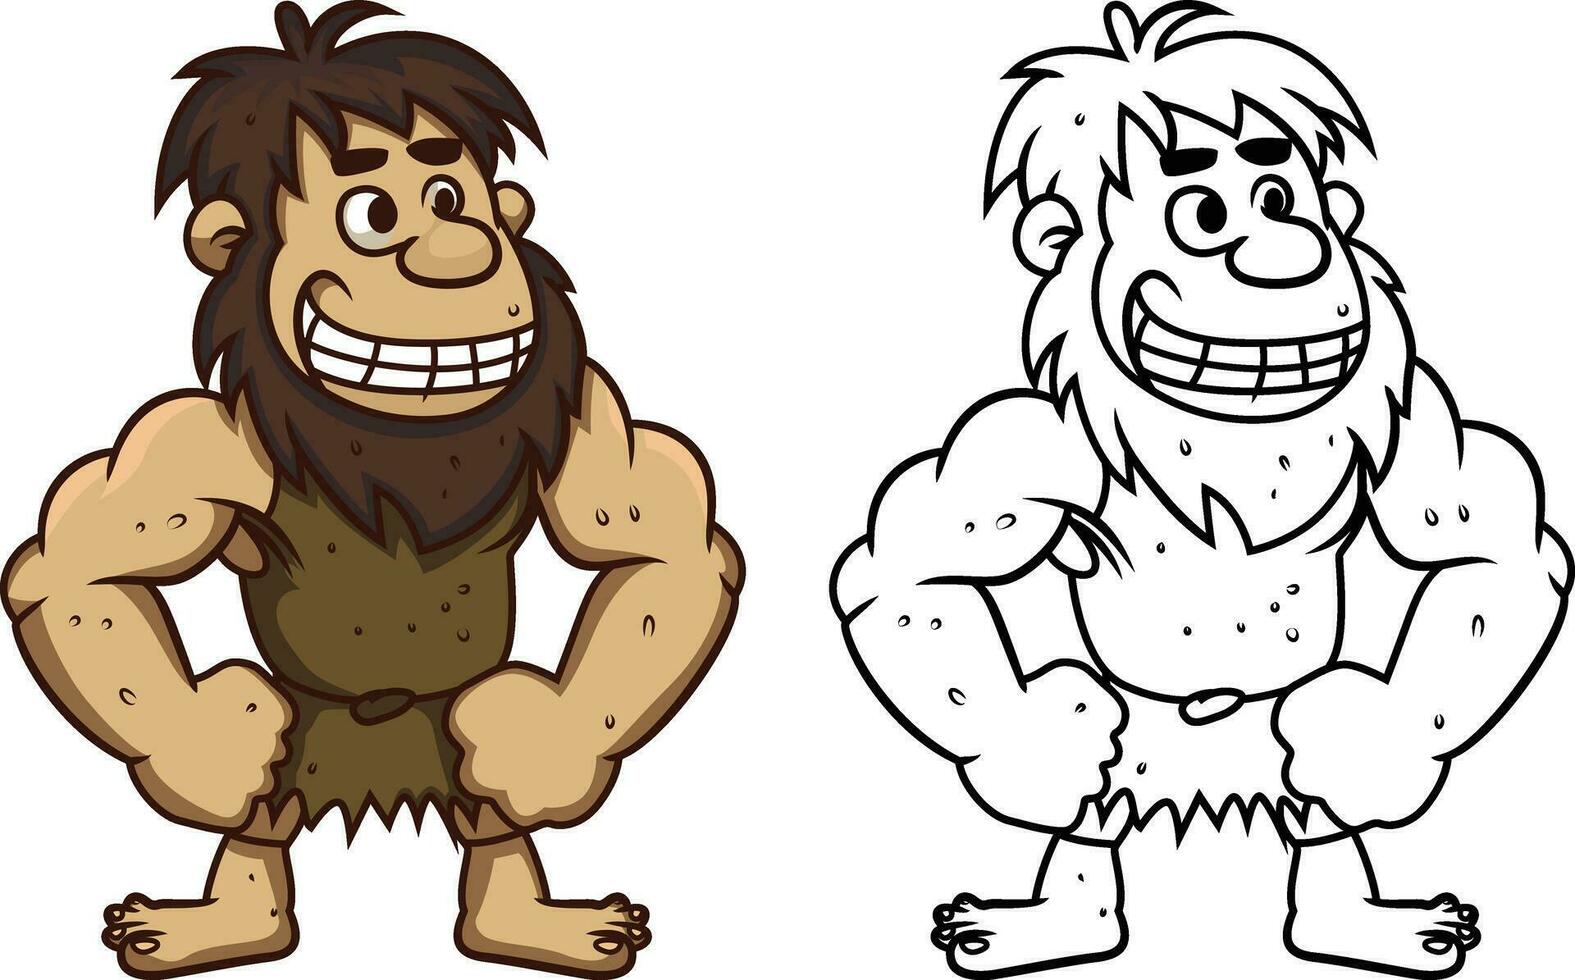 Caveman cartoon vector illustration , primitive humans , prehistoric muscular man mascot character colored and black and white line art vector image